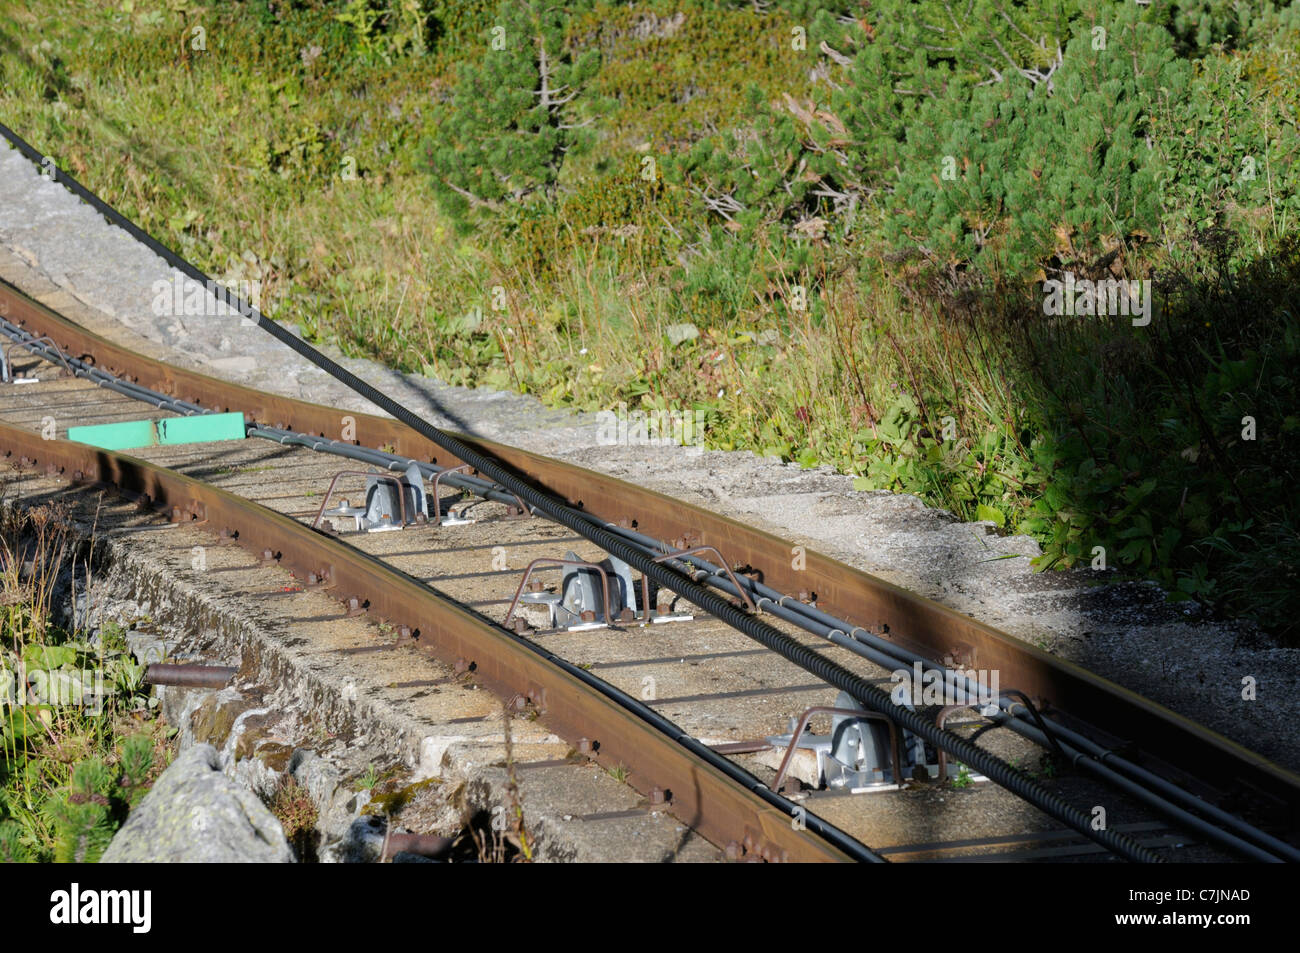 La Svizzera, Europa occidentale, Grimsel regione, nr. Guttannen, Gelmerbahn funicolare. Foto Stock